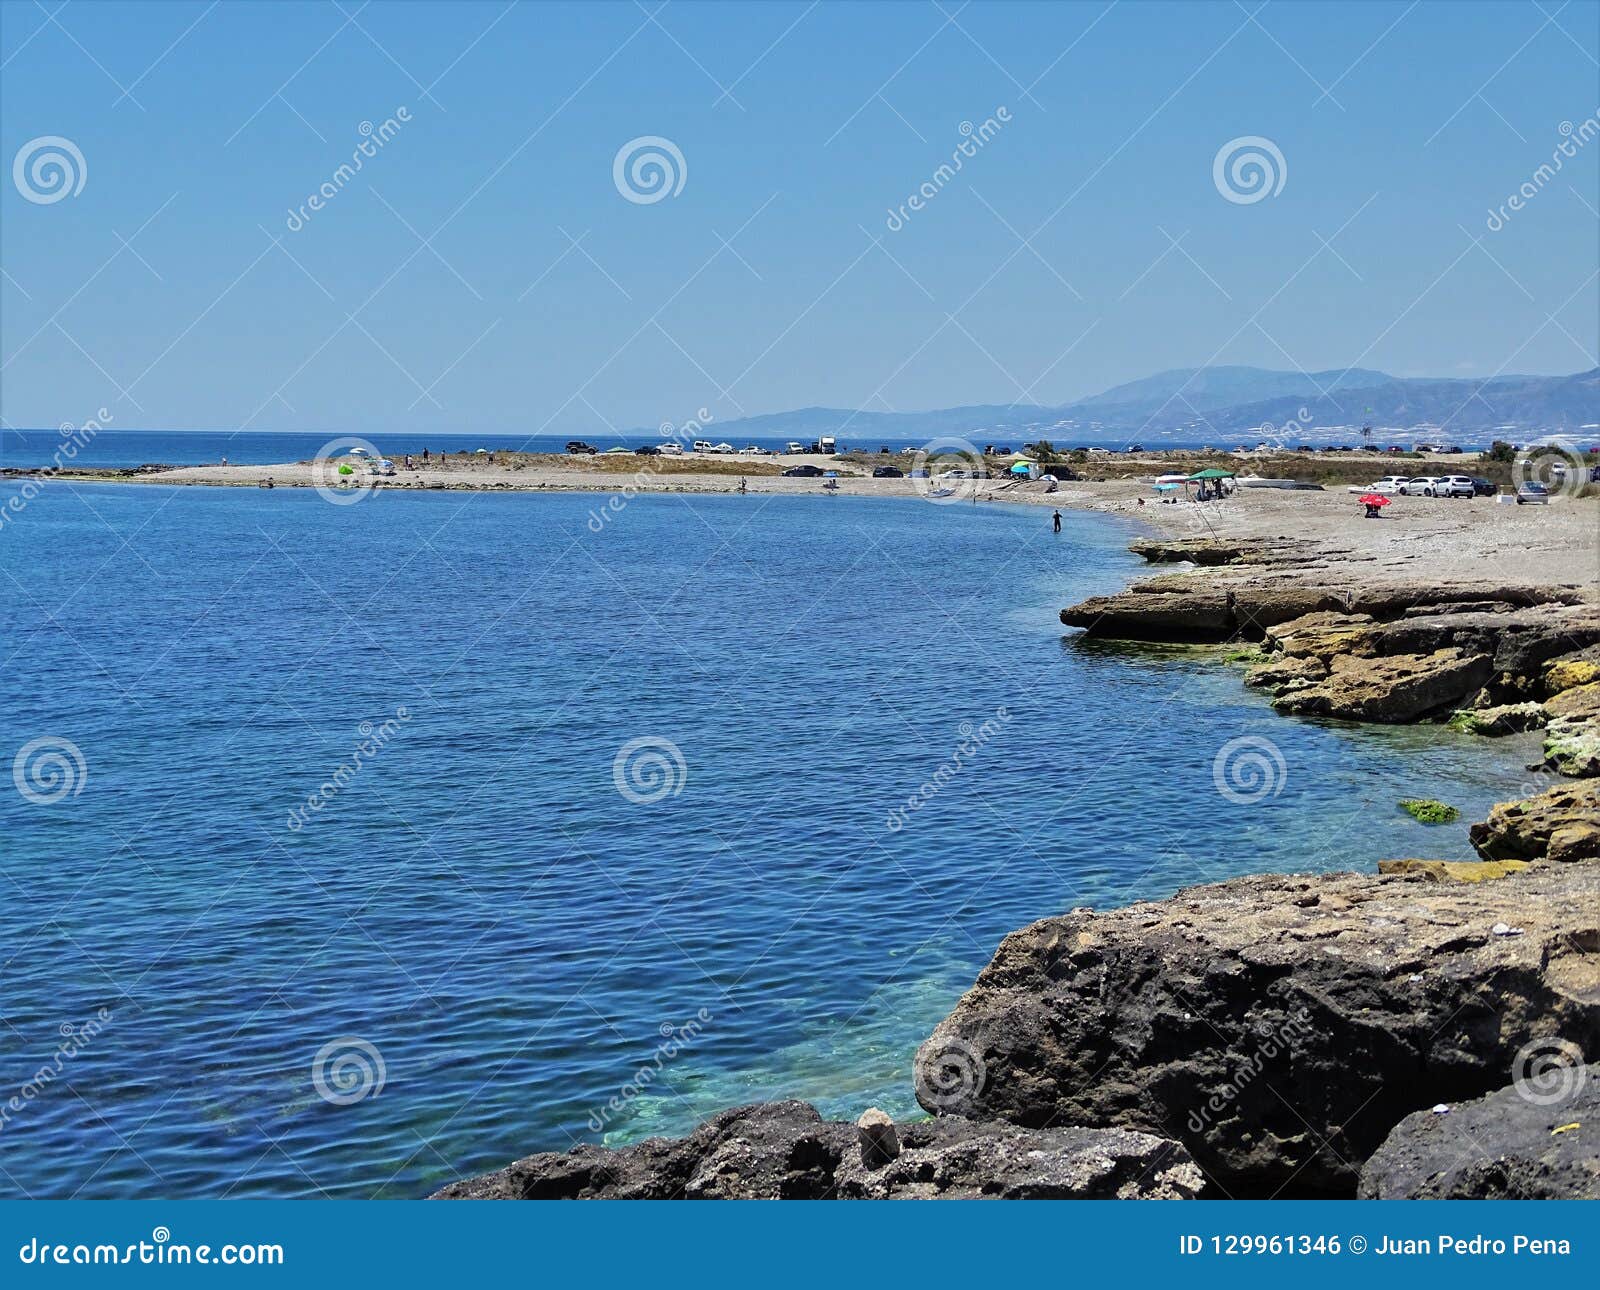 beach of the guardias viejas from el ejido almeria andalusia spain